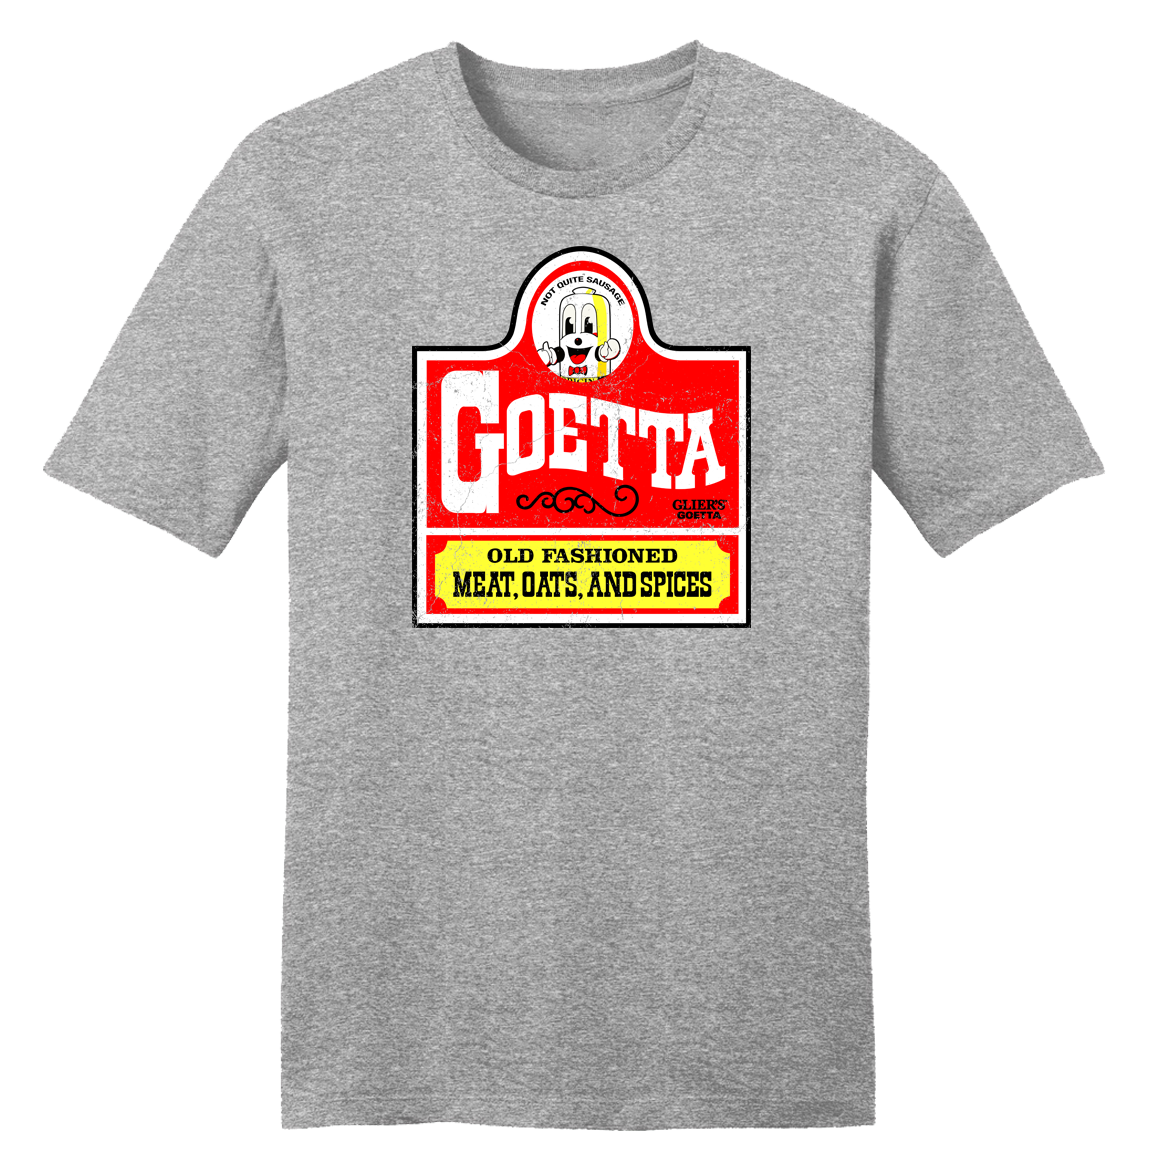 Glier's Old-Fashioned Goetta - Cincy Shirts